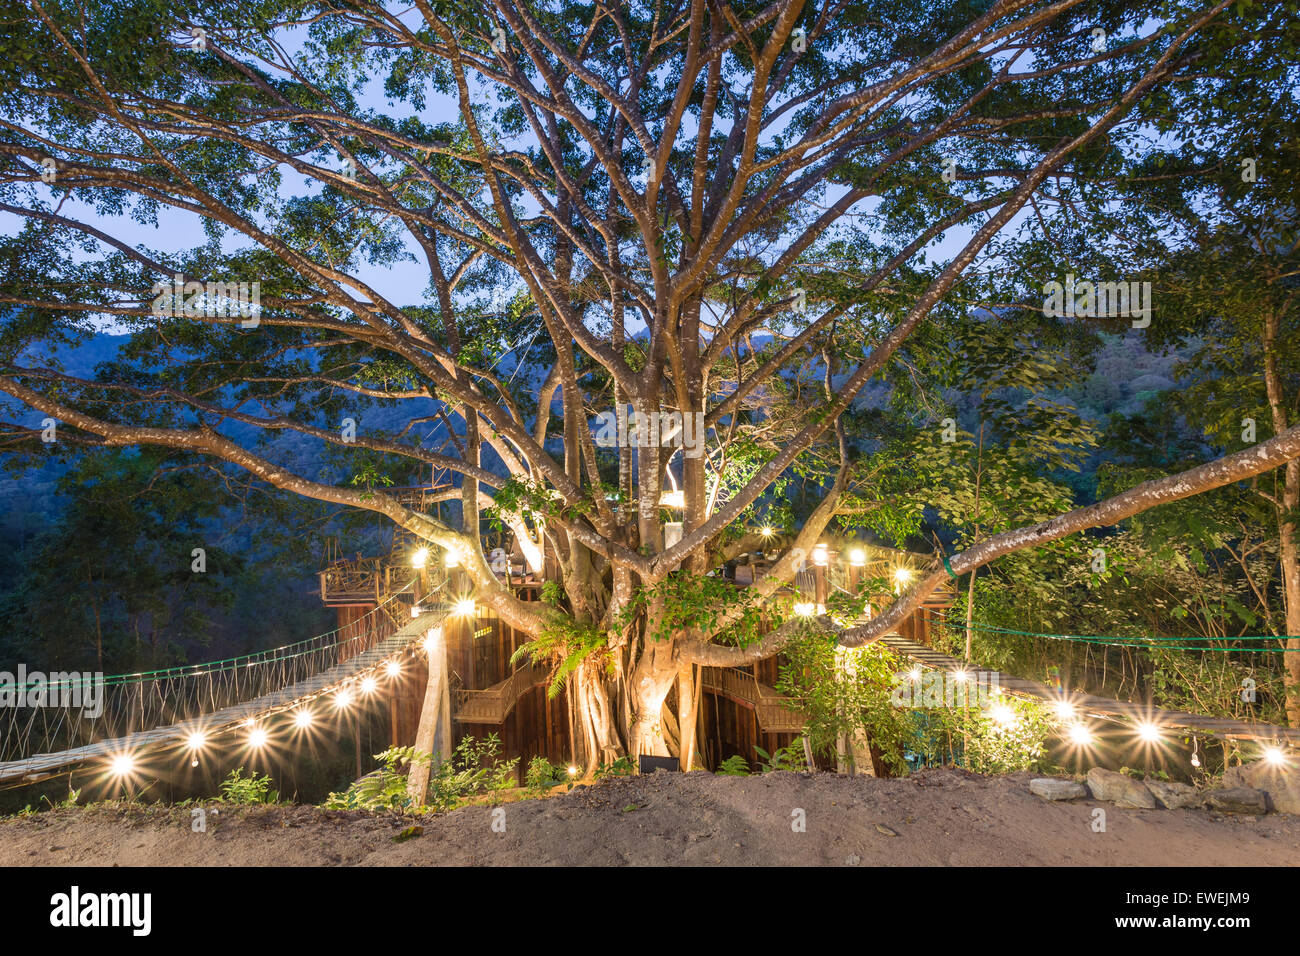 Haus Architektur Baum Lampe Magie Stockfotografie - Alamy